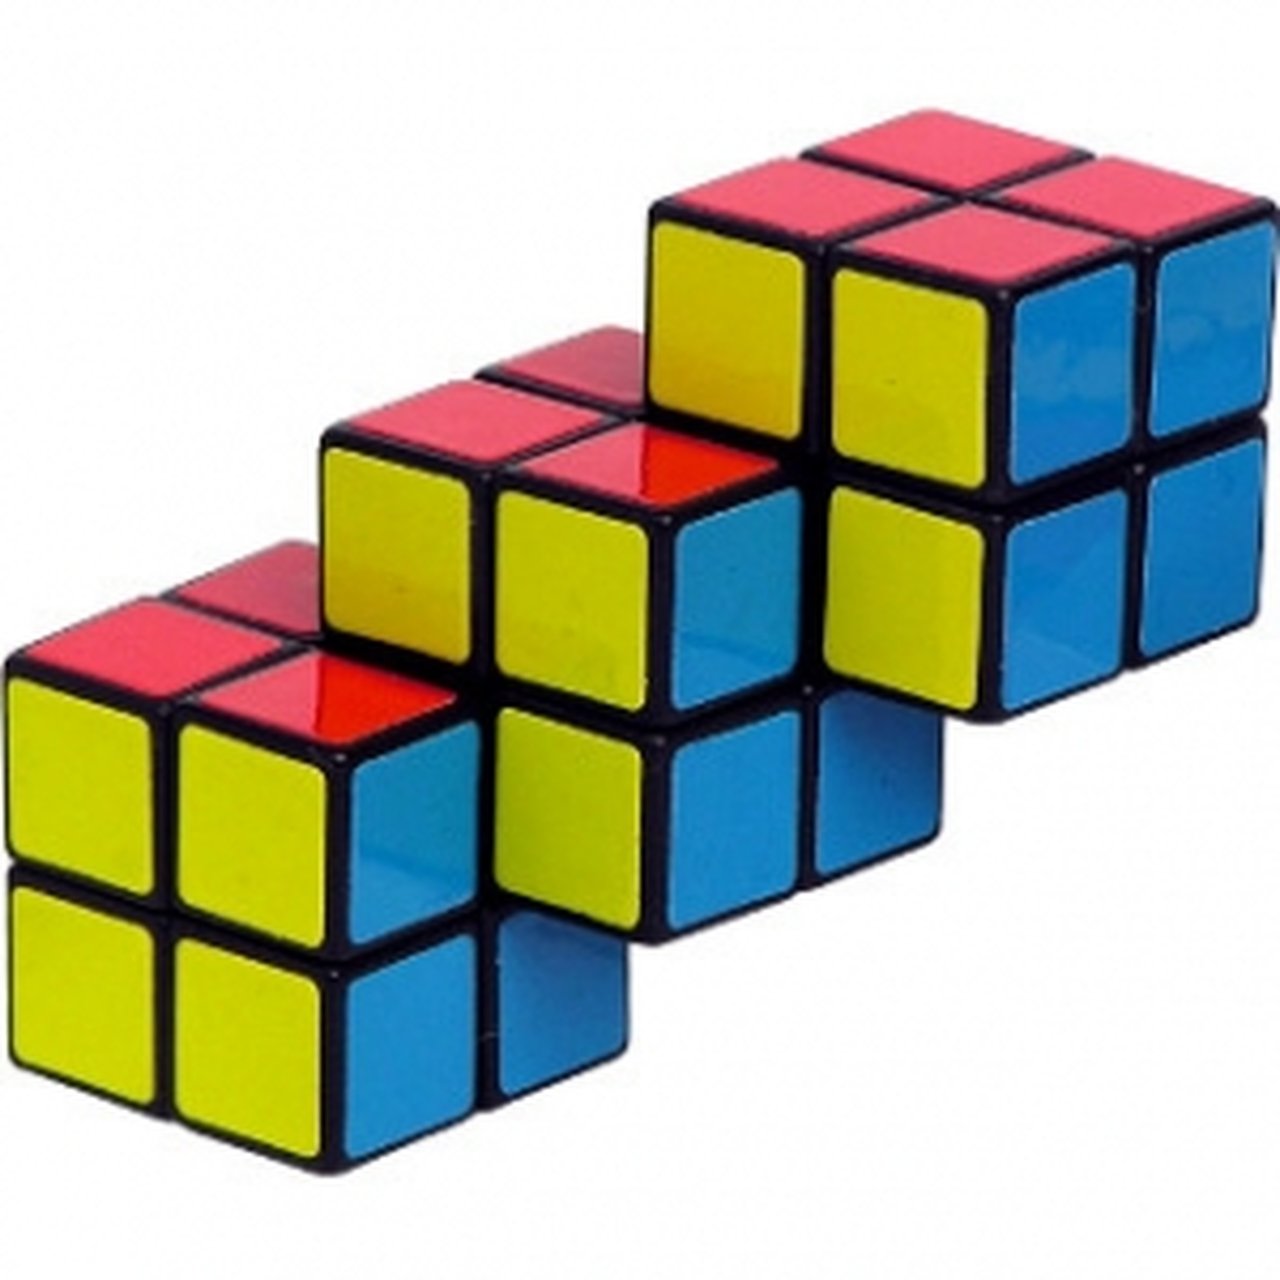 Triple 2*2*2 Cube Puzzle-Yarrawonga Fun and Games